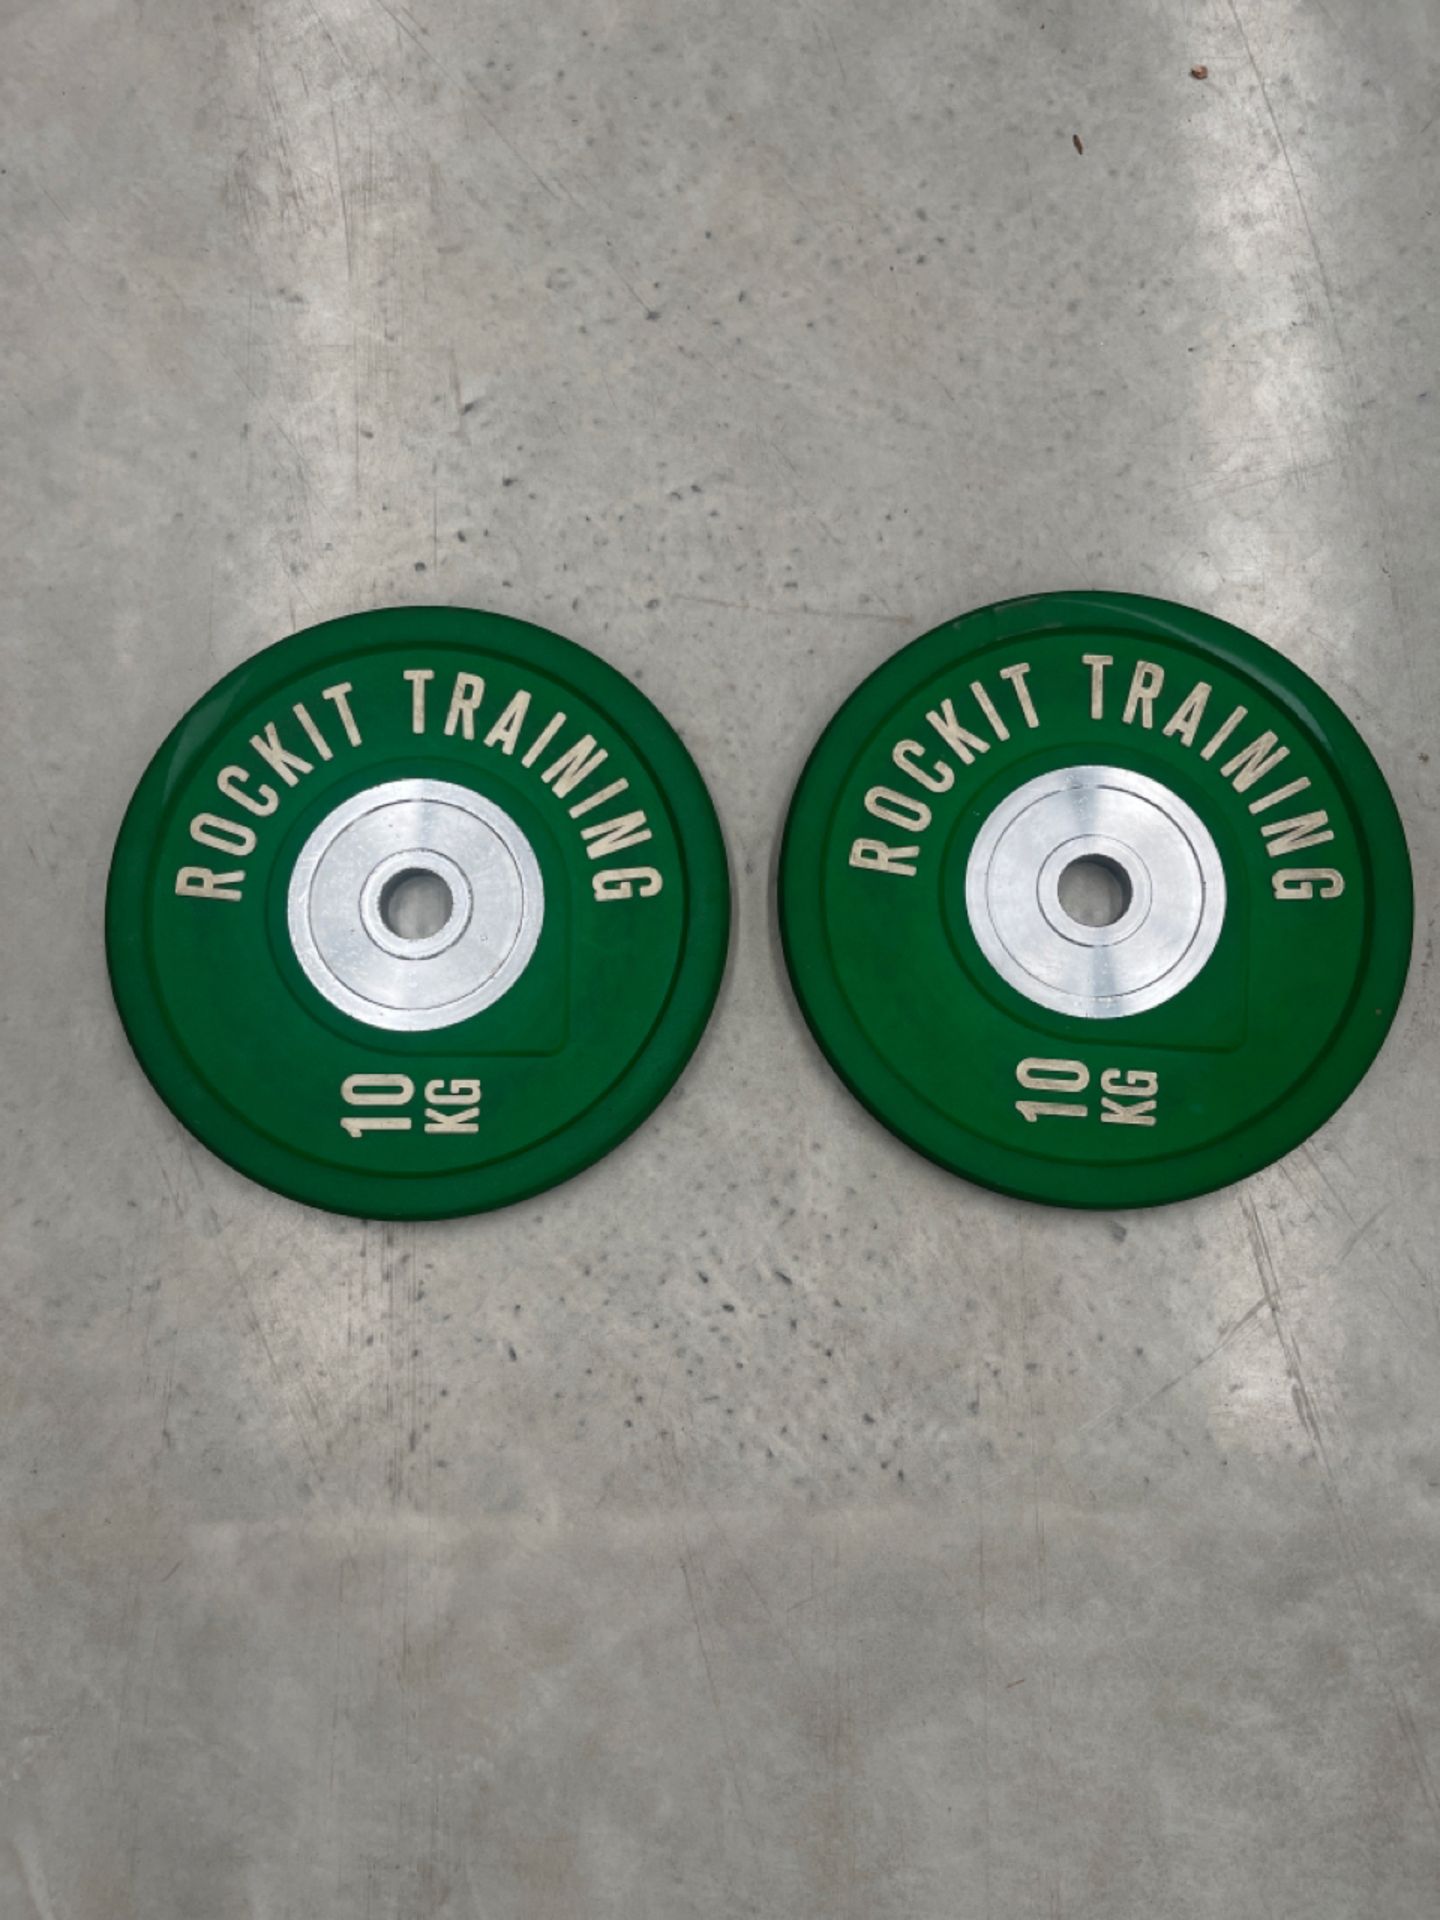 Rockit Training 10kg Bumper Plates x 2